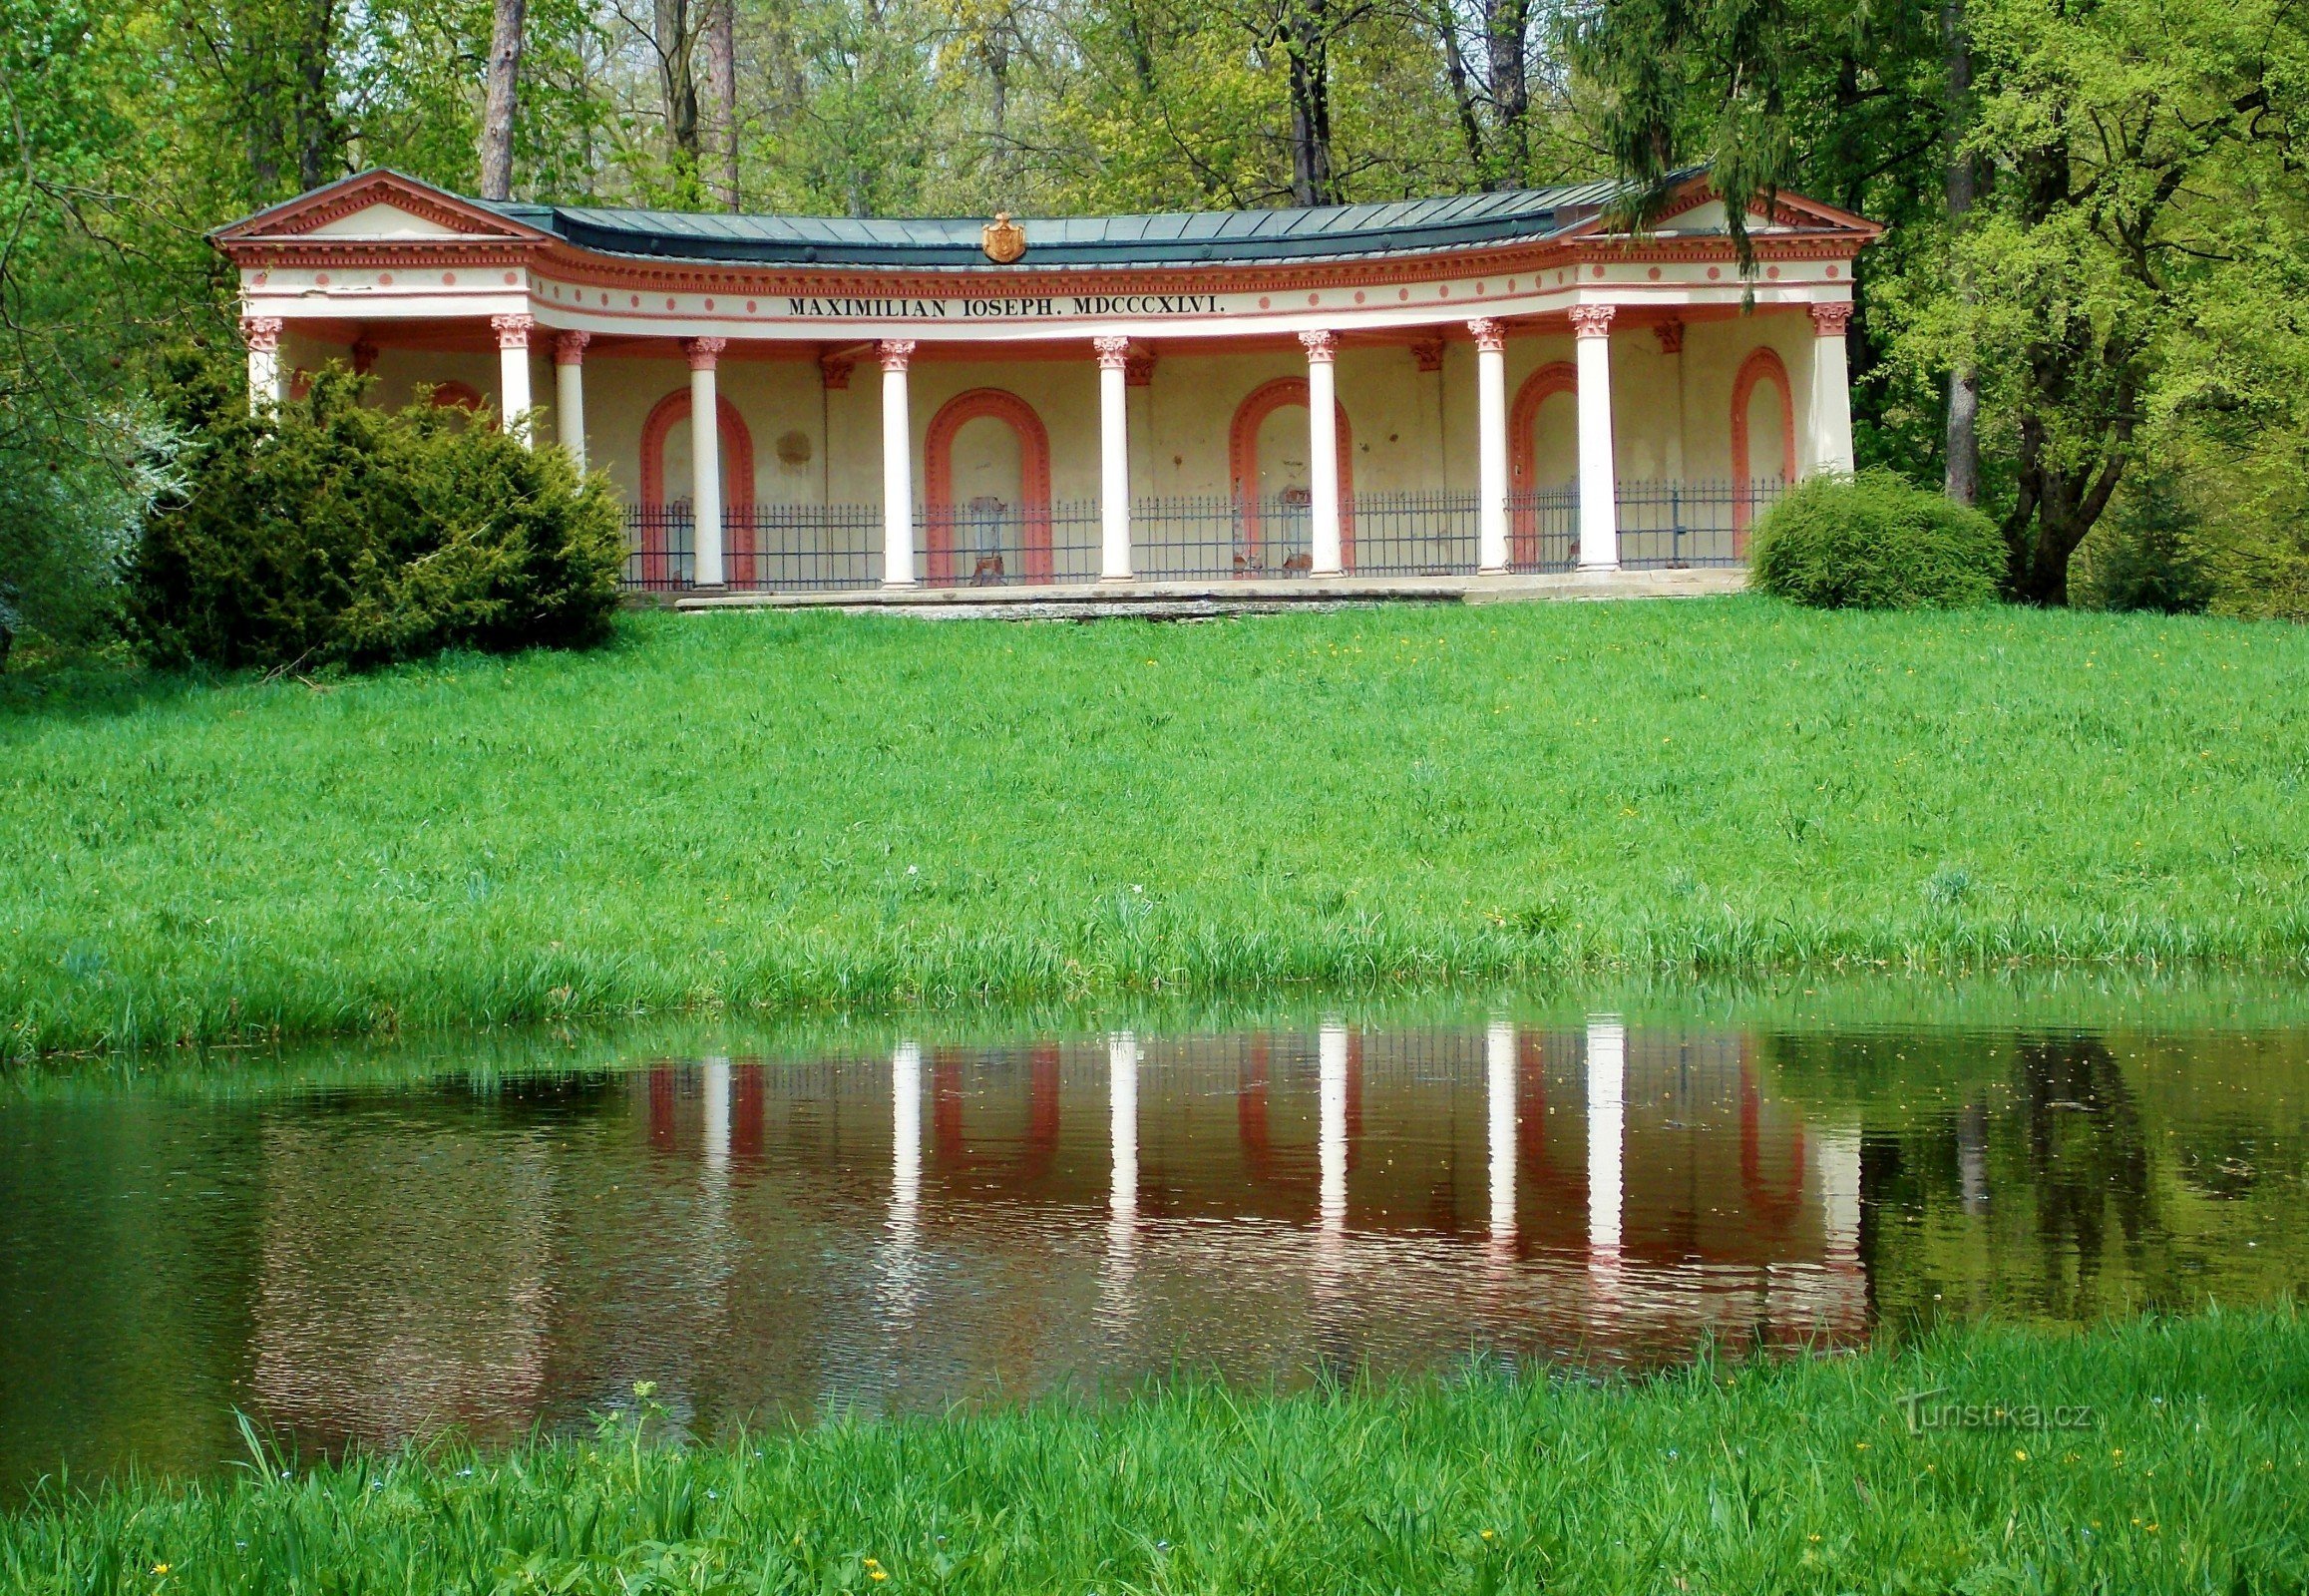 Zum Podzámecká-Garten in Kroměříž, rund um die Pompejer Kolonnade